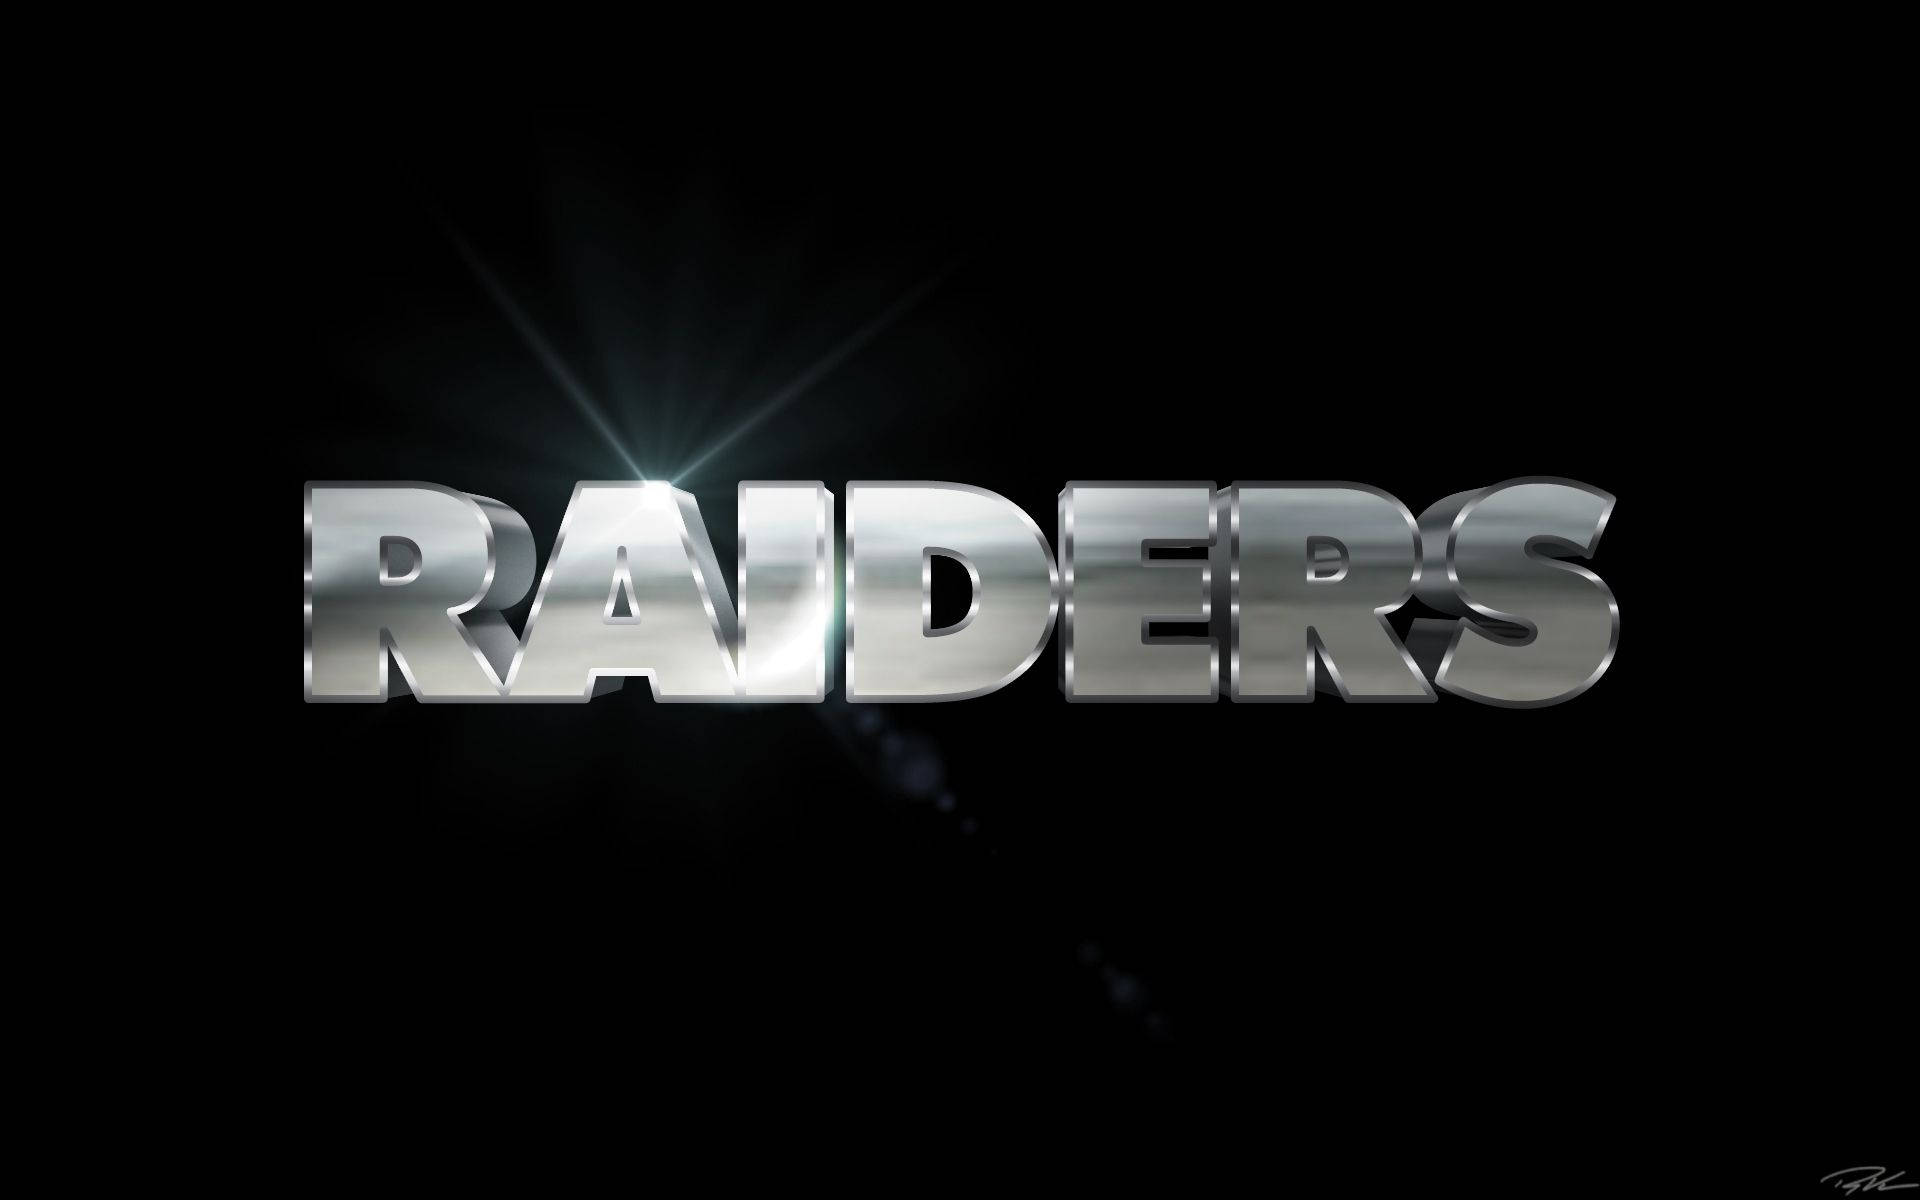 Silver Metallic Oakland Raiders Logo Wallpaper